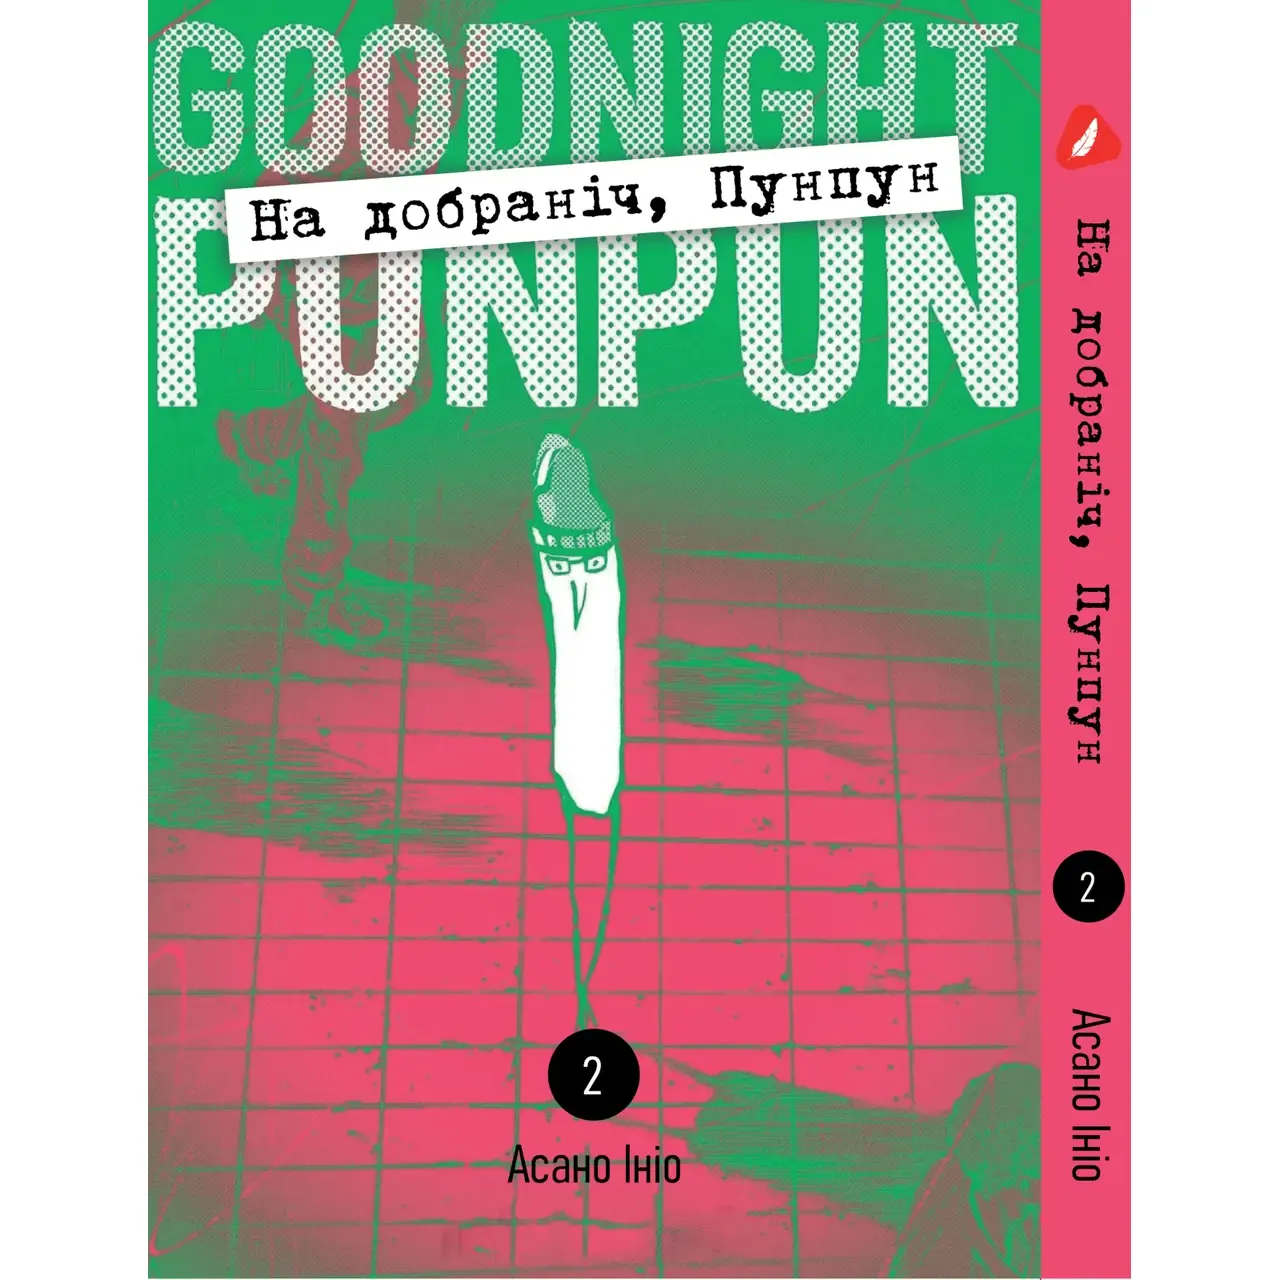 Комплект манги Yohoho Print Goodnight Punpun Спокойной ночи Пунпун Том с 1 - 5 YP GP K 01 - Асано Инио (1832373405.0) - фото 3